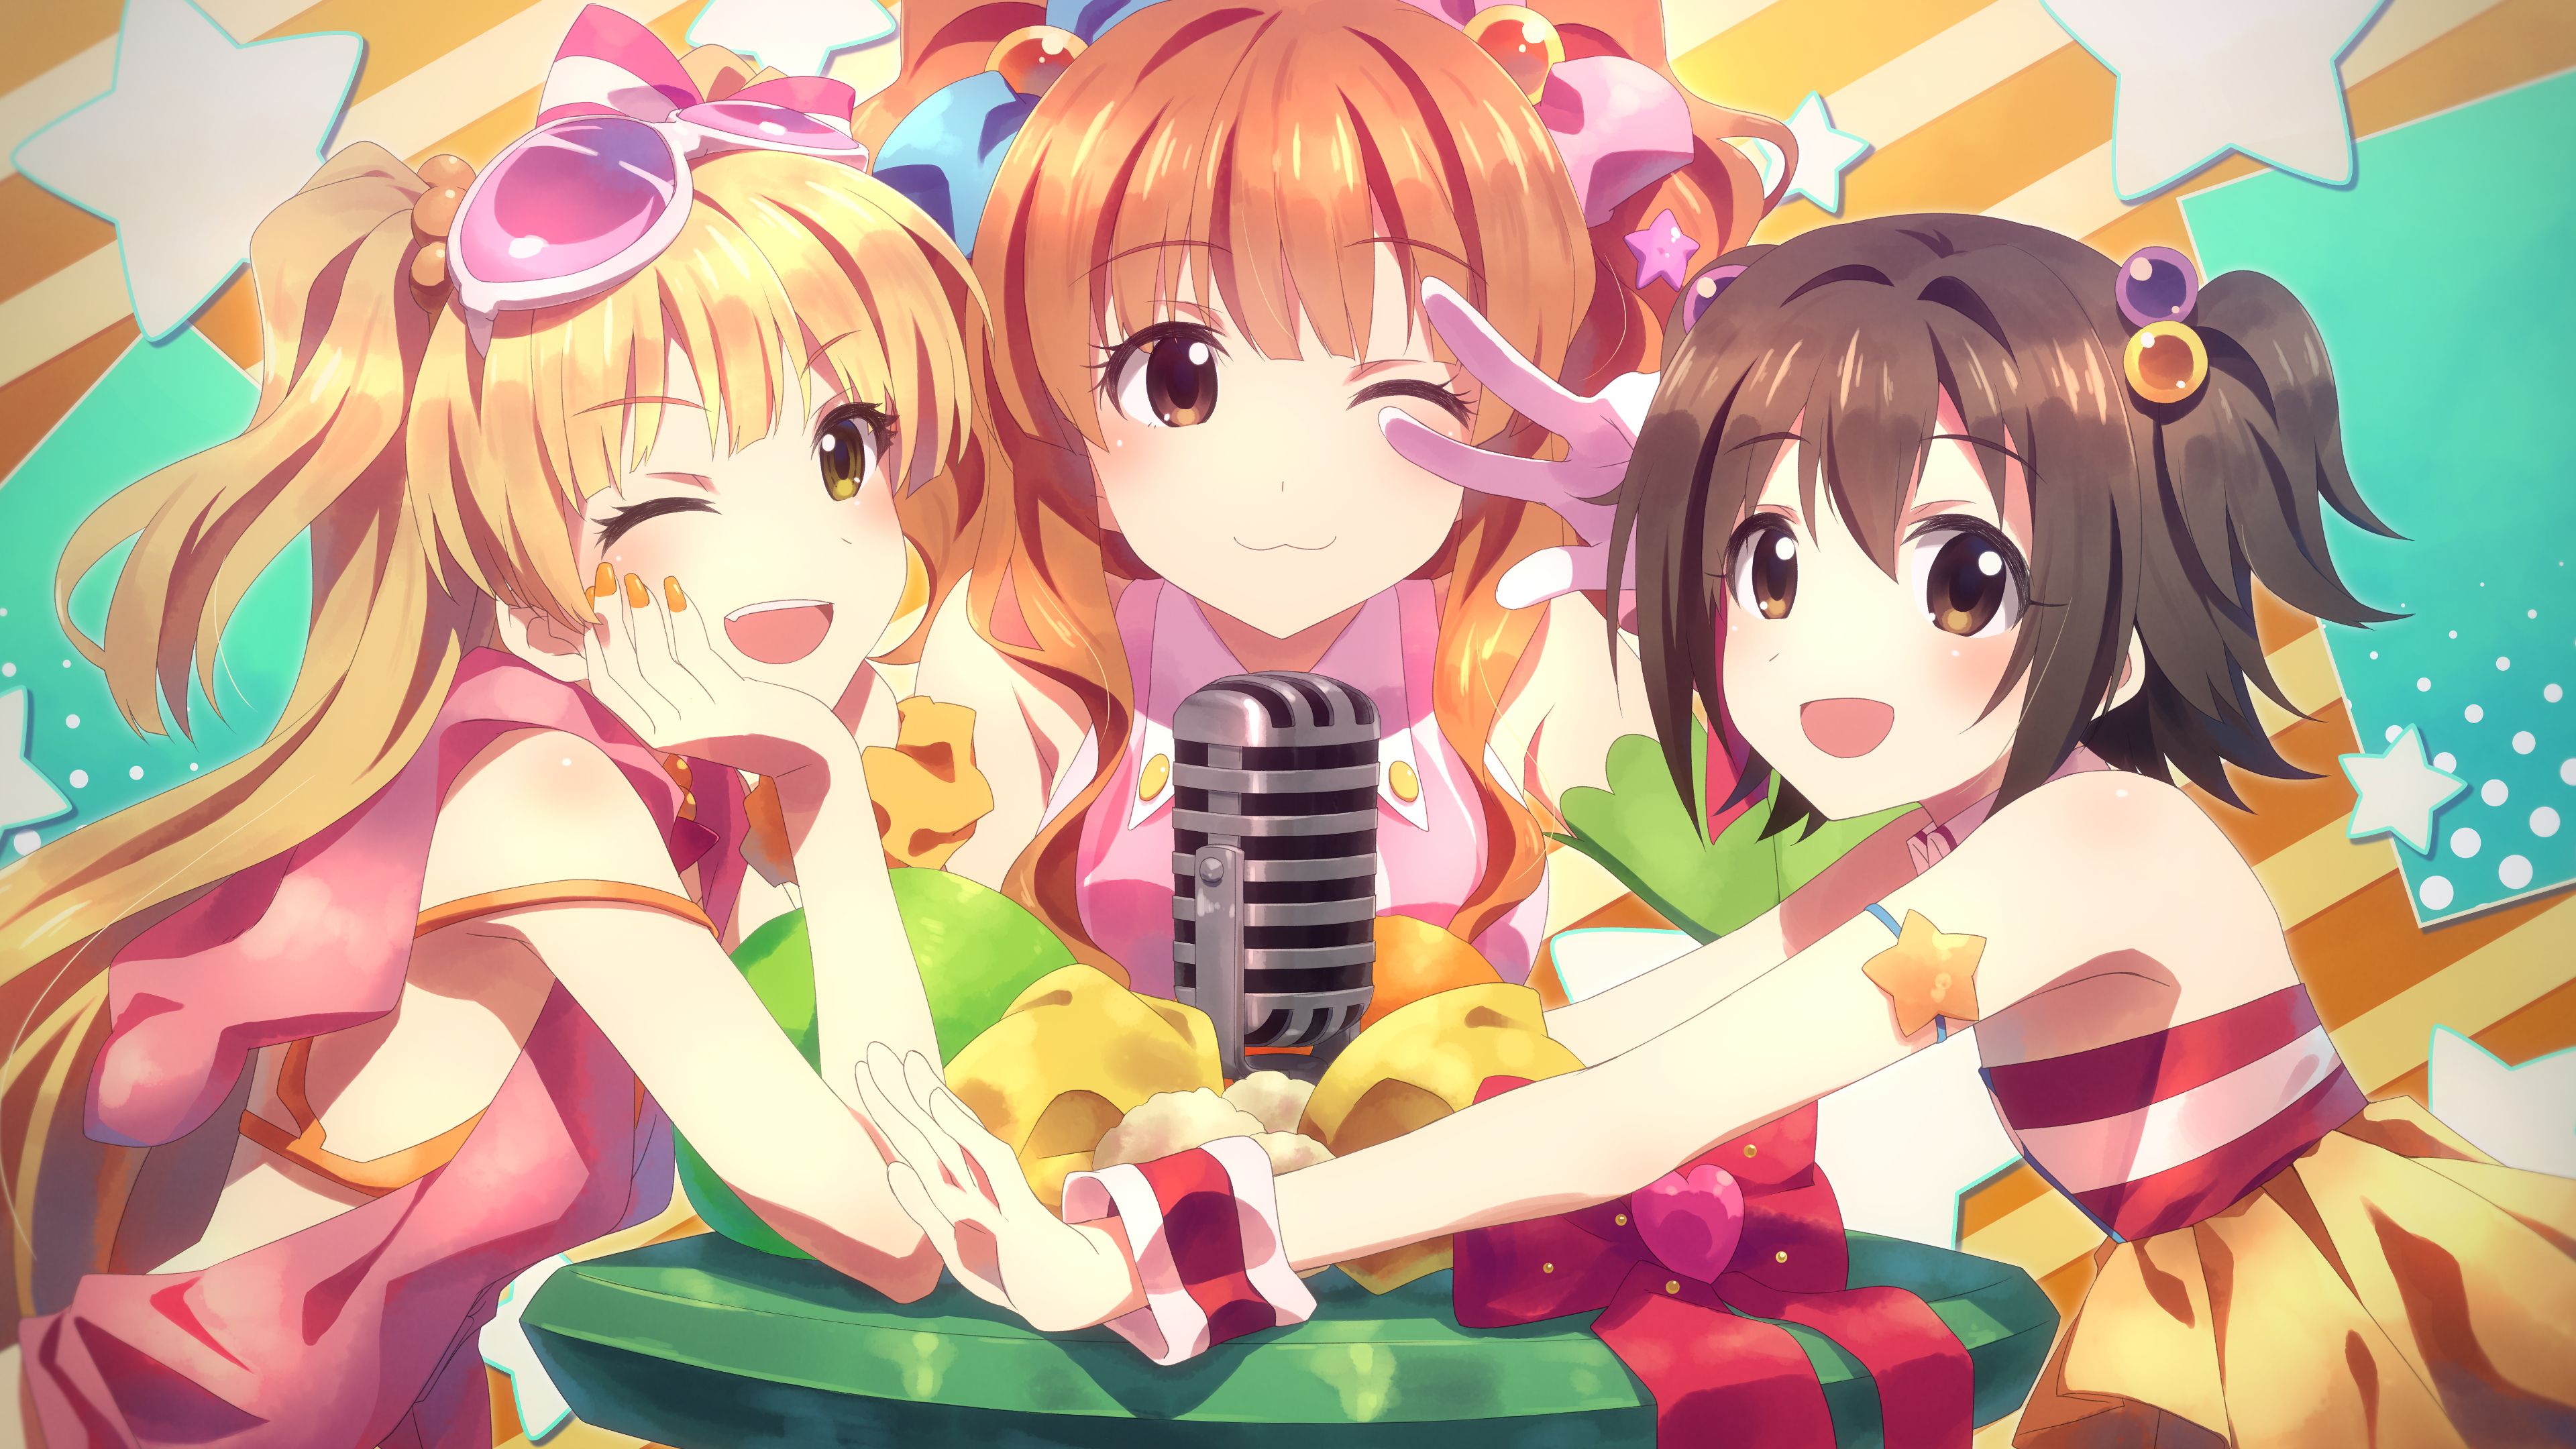 Anime Group Of Girls